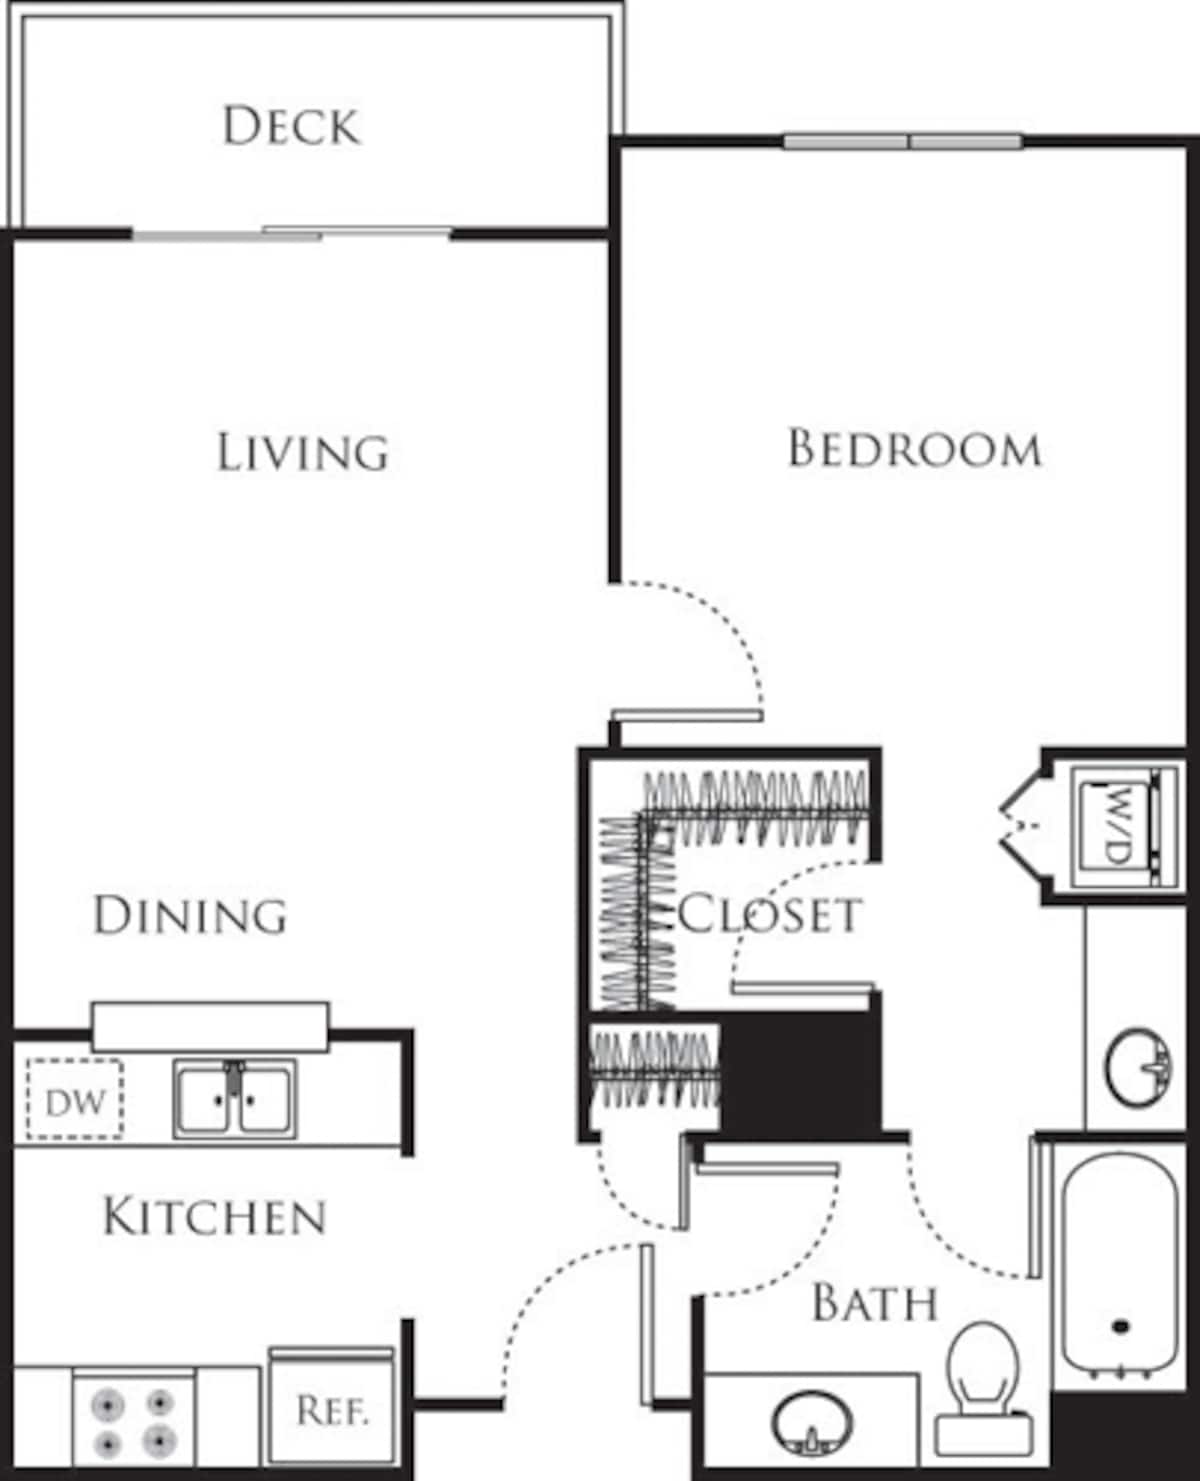 Floorplan diagram for Plan B, showing 1 bedroom